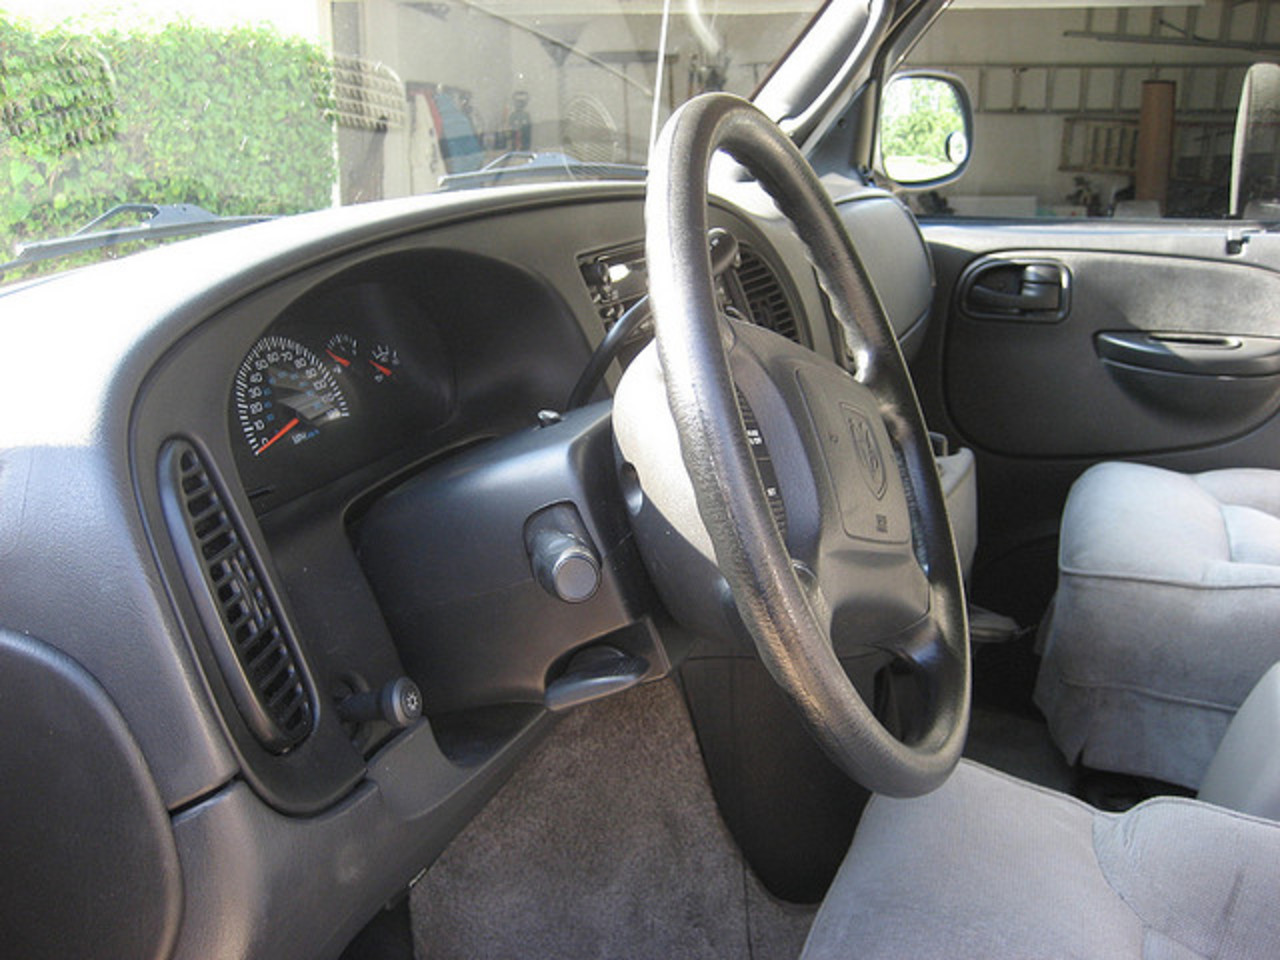 Dodge Ram Van 1500 driver-side interior | Flickr - Photo Sharing!